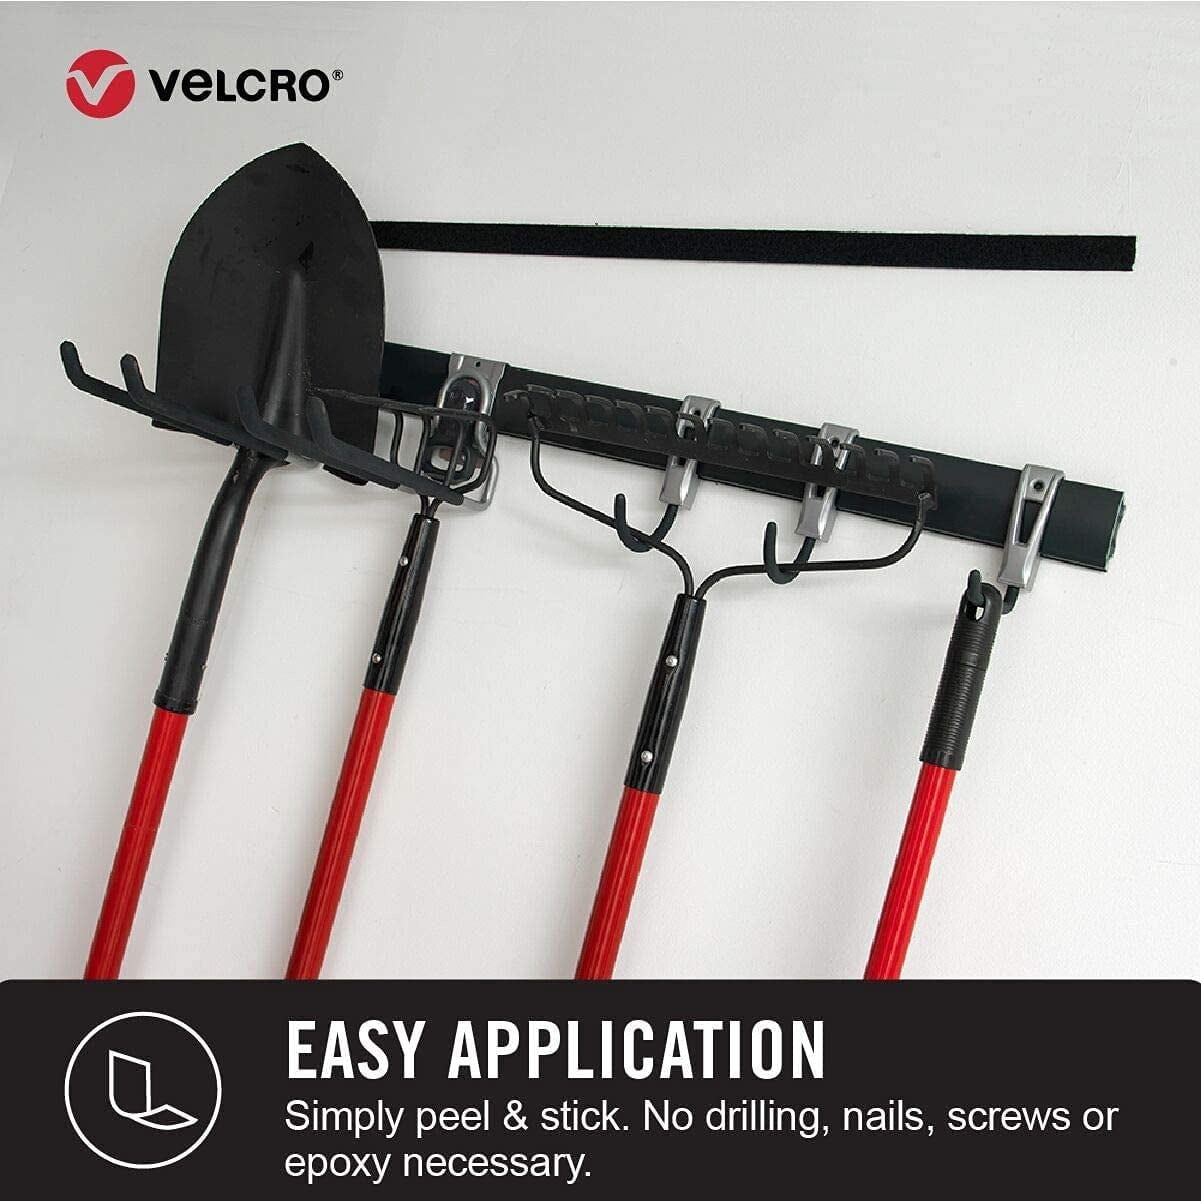 VELCRO Brand Industrial Strength Fasteners, Professional Grade Heavy Duty  4inx2in Strips Black 4 Ct. 